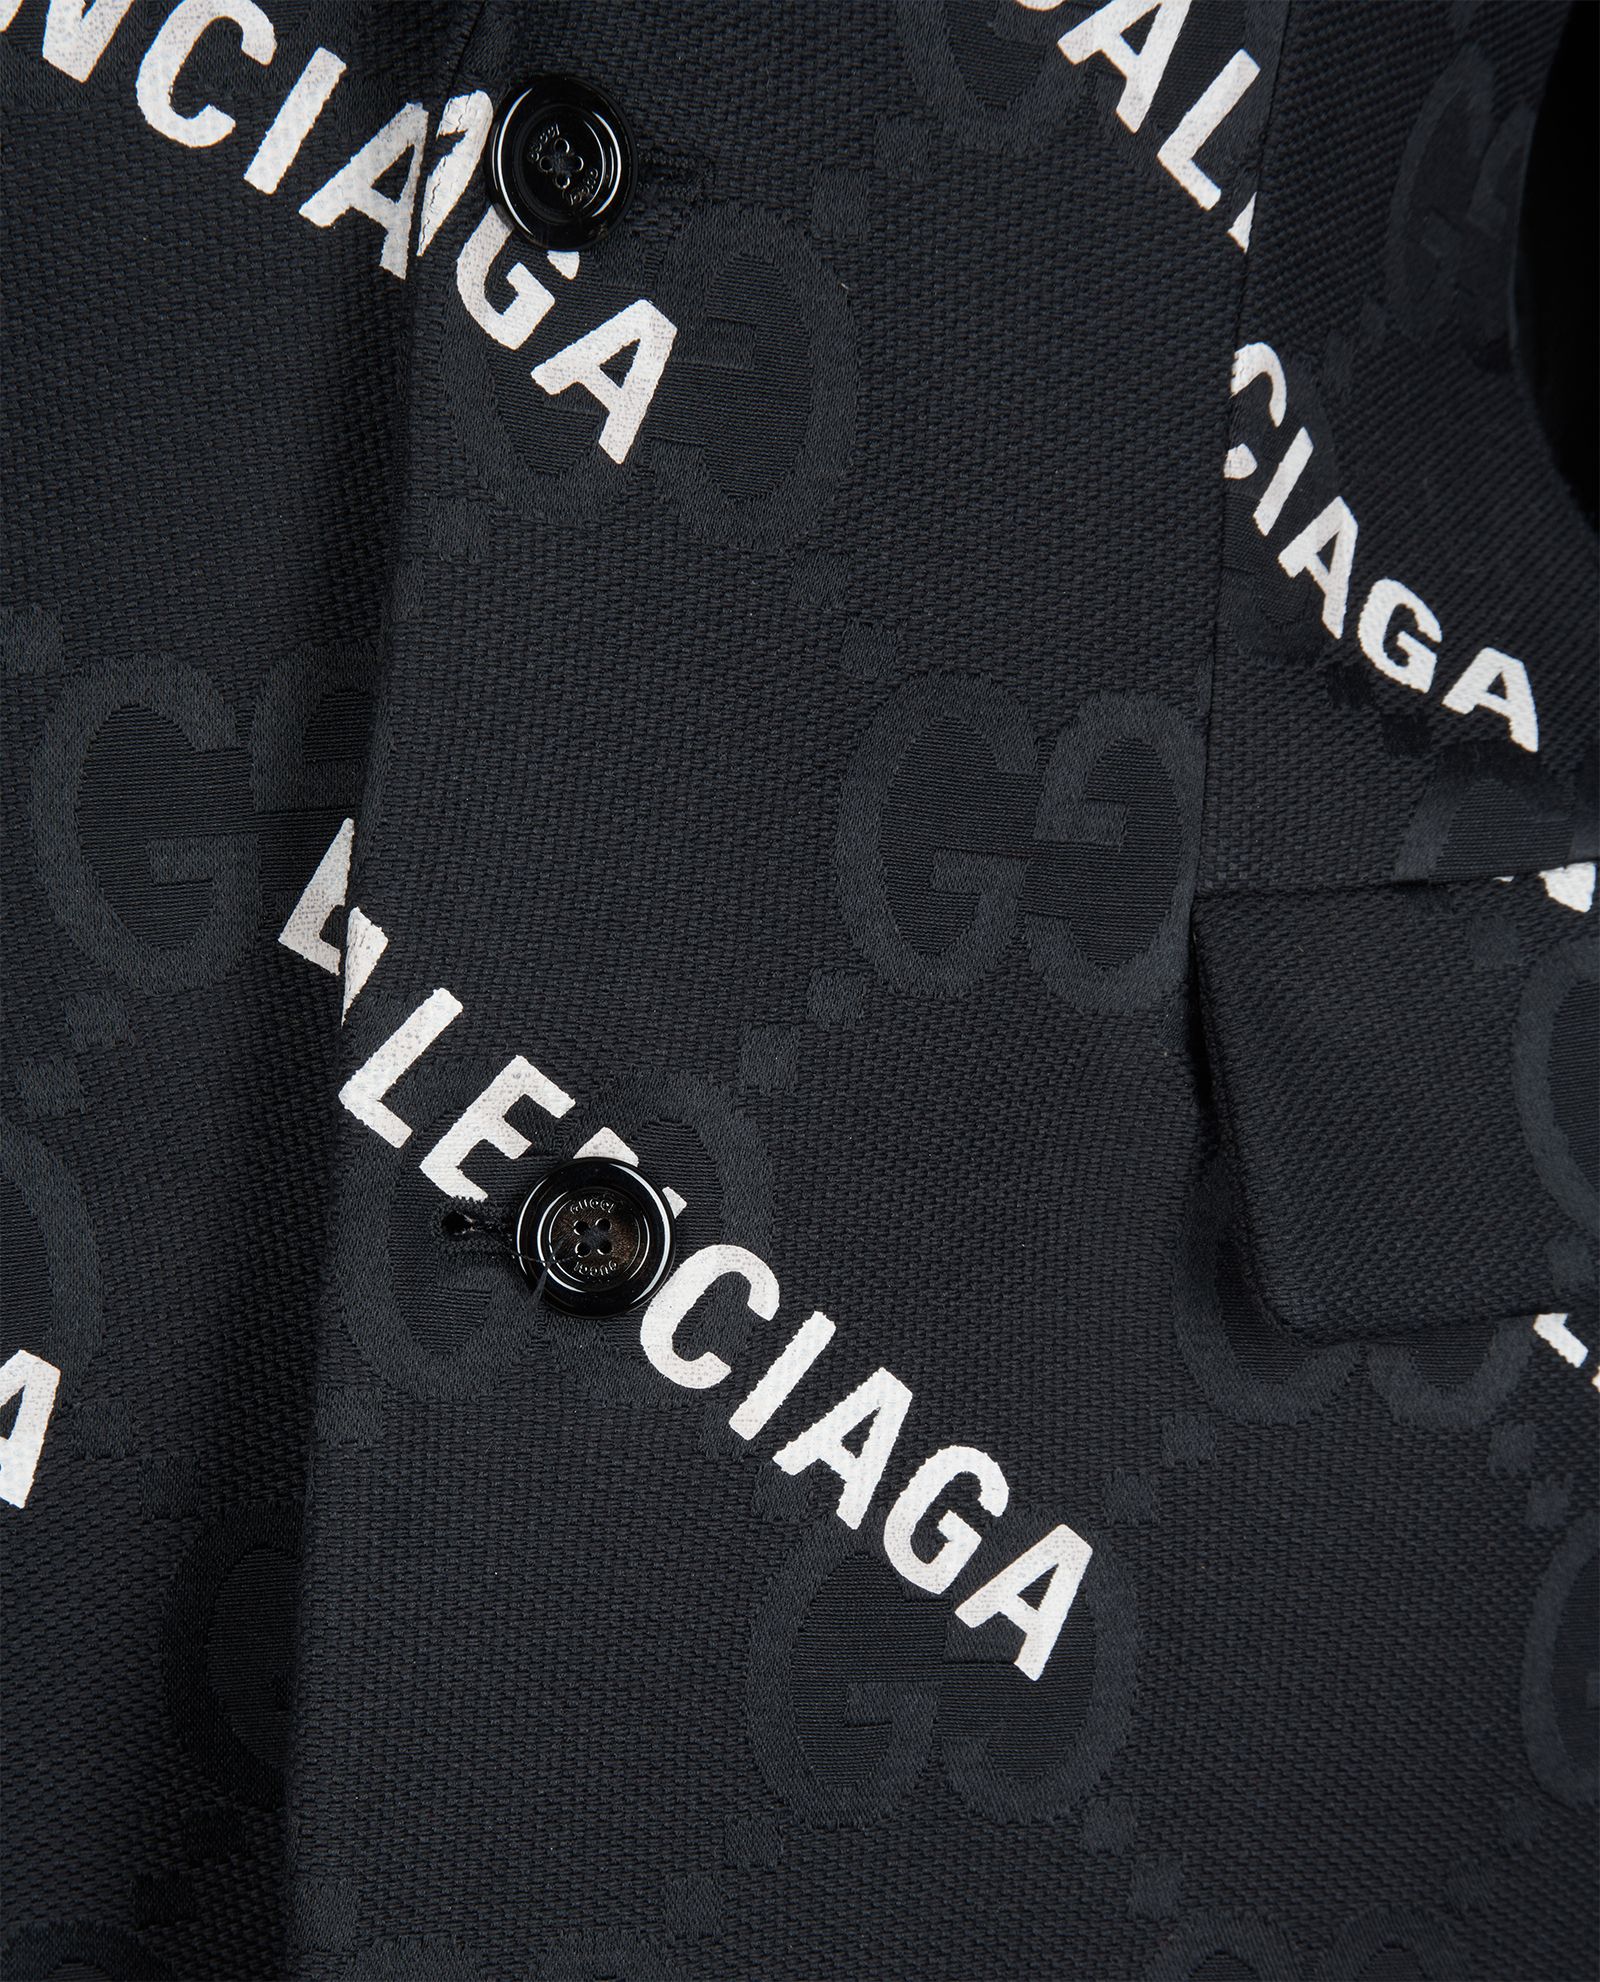 Gucci x Balenciaga The Hacker Jacket, Jackets - Designer Exchange